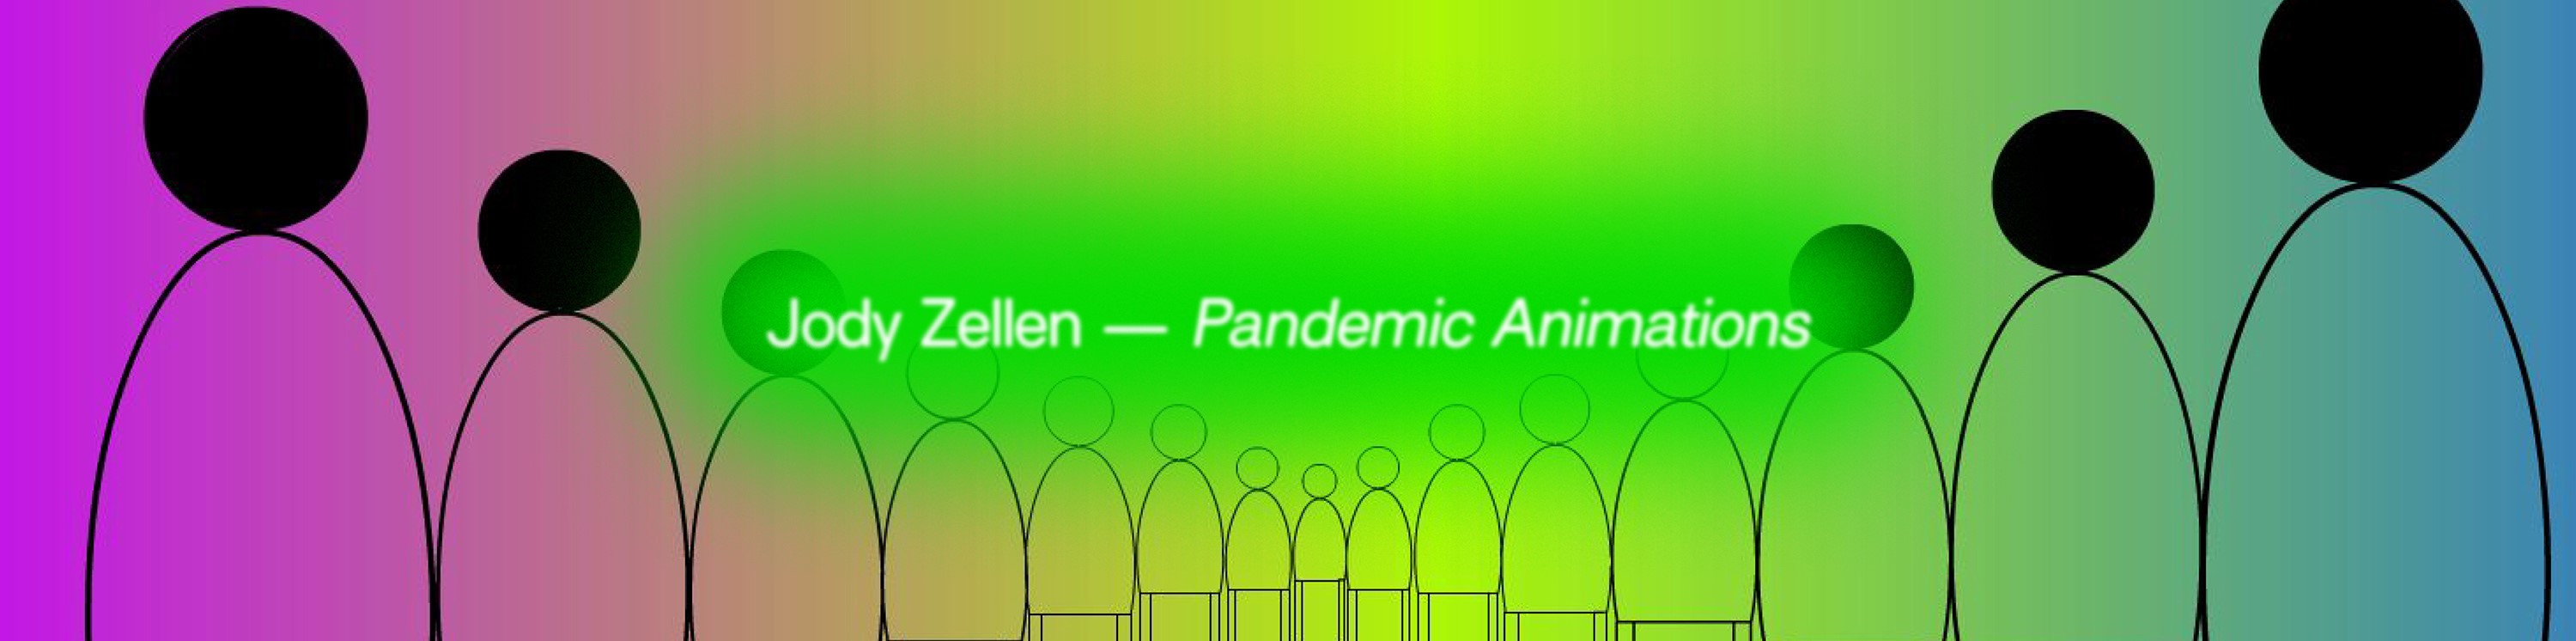 Jody Zellen - Pandemic Animations